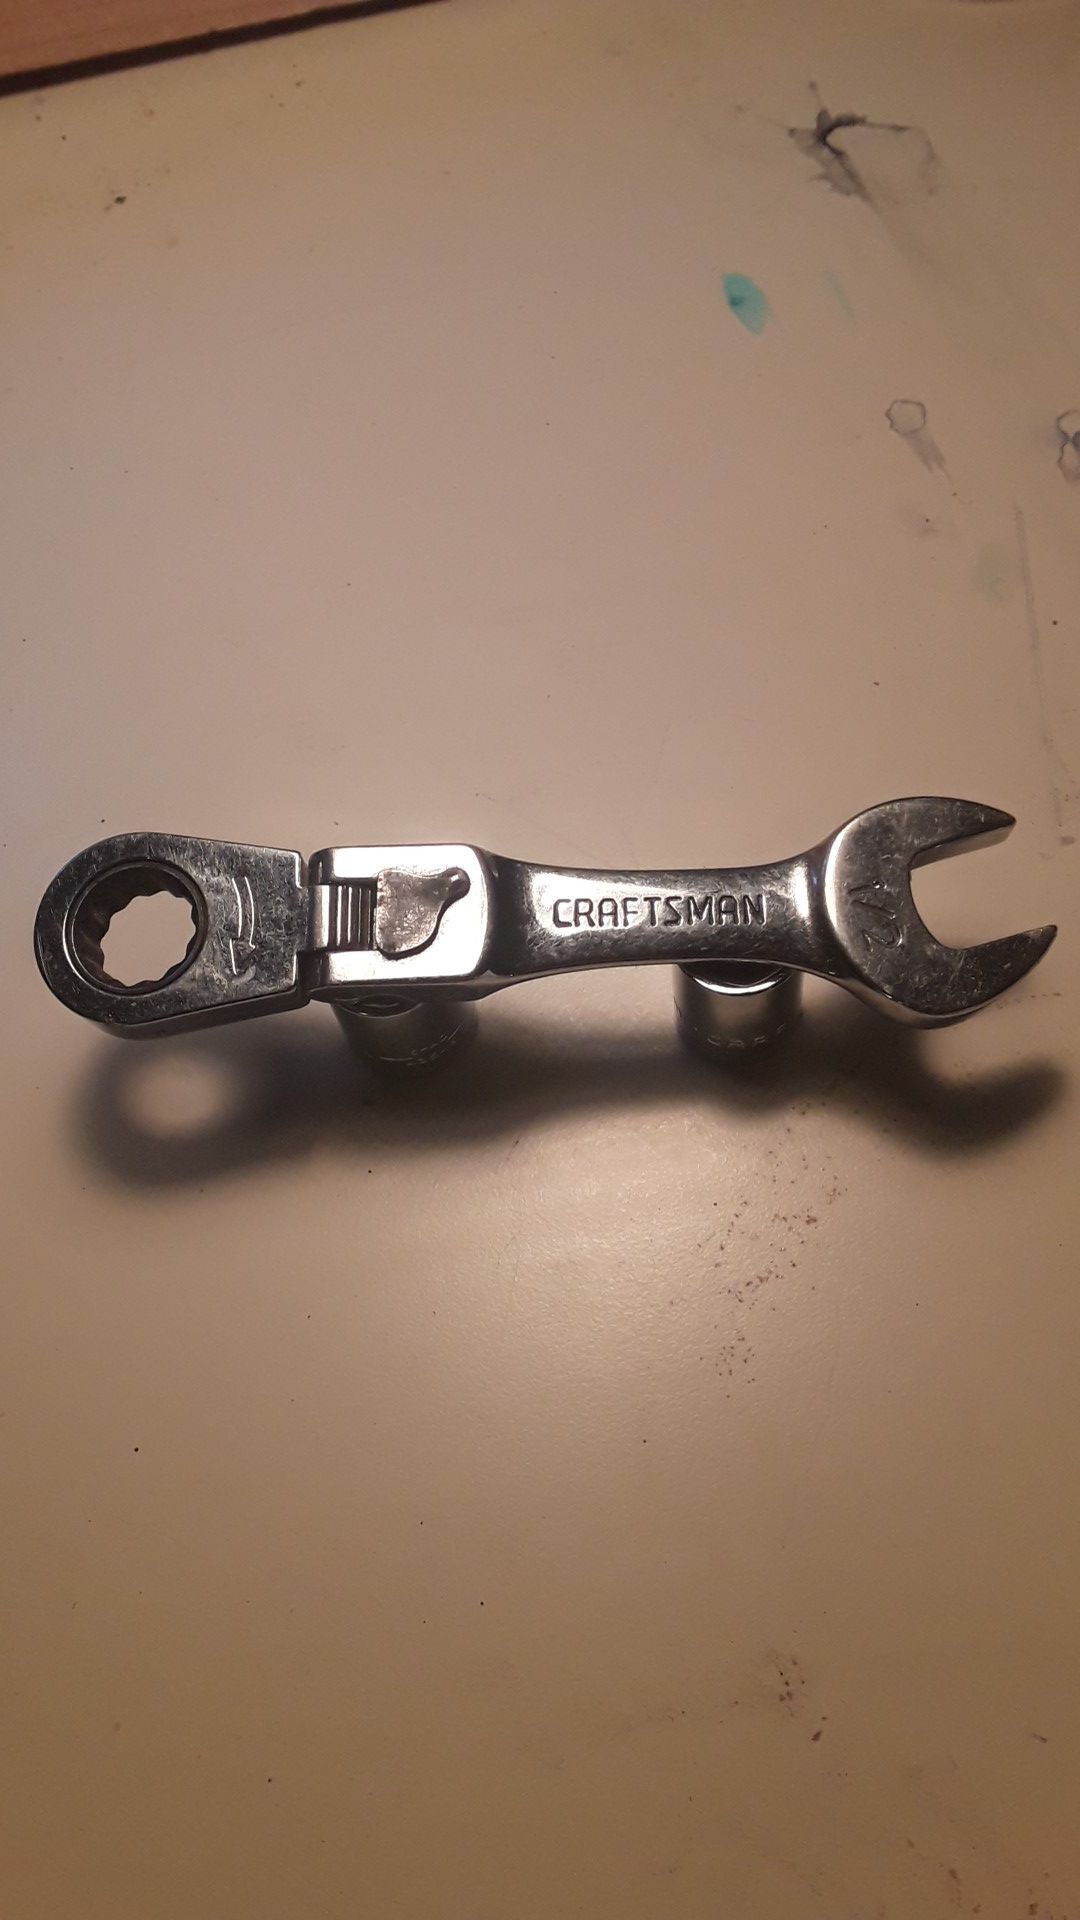 Craftsman stubby 1/2" locking flex head ratchet wrench